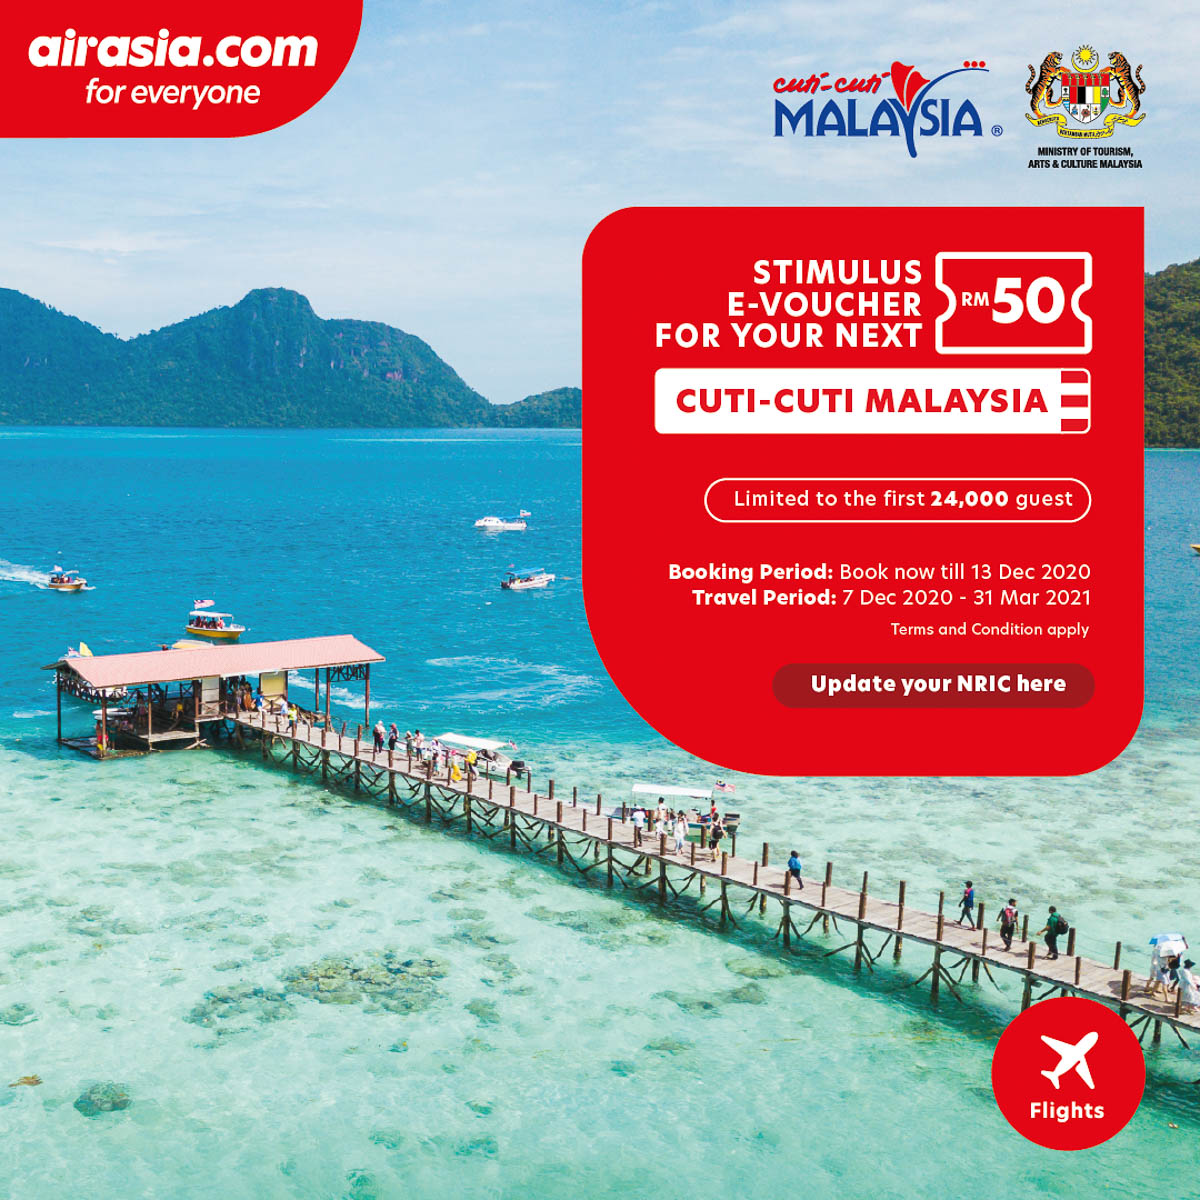 AirAsia Cuti-Cuti Malaysia